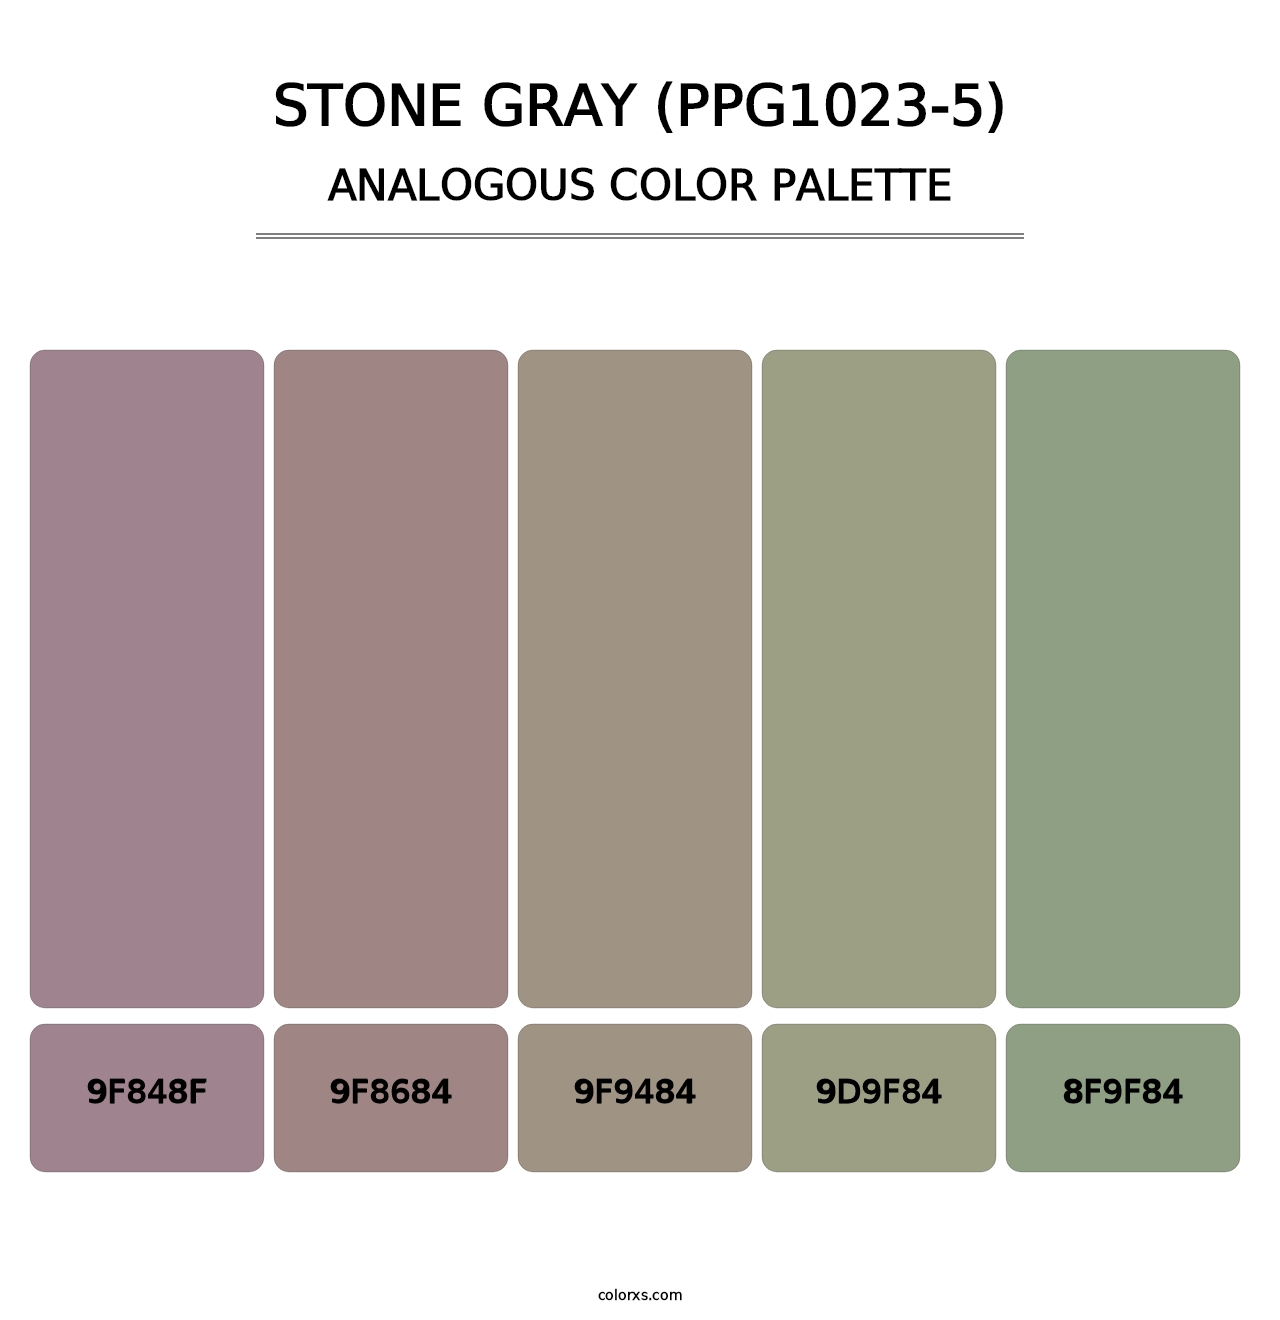 Stone Gray (PPG1023-5) - Analogous Color Palette